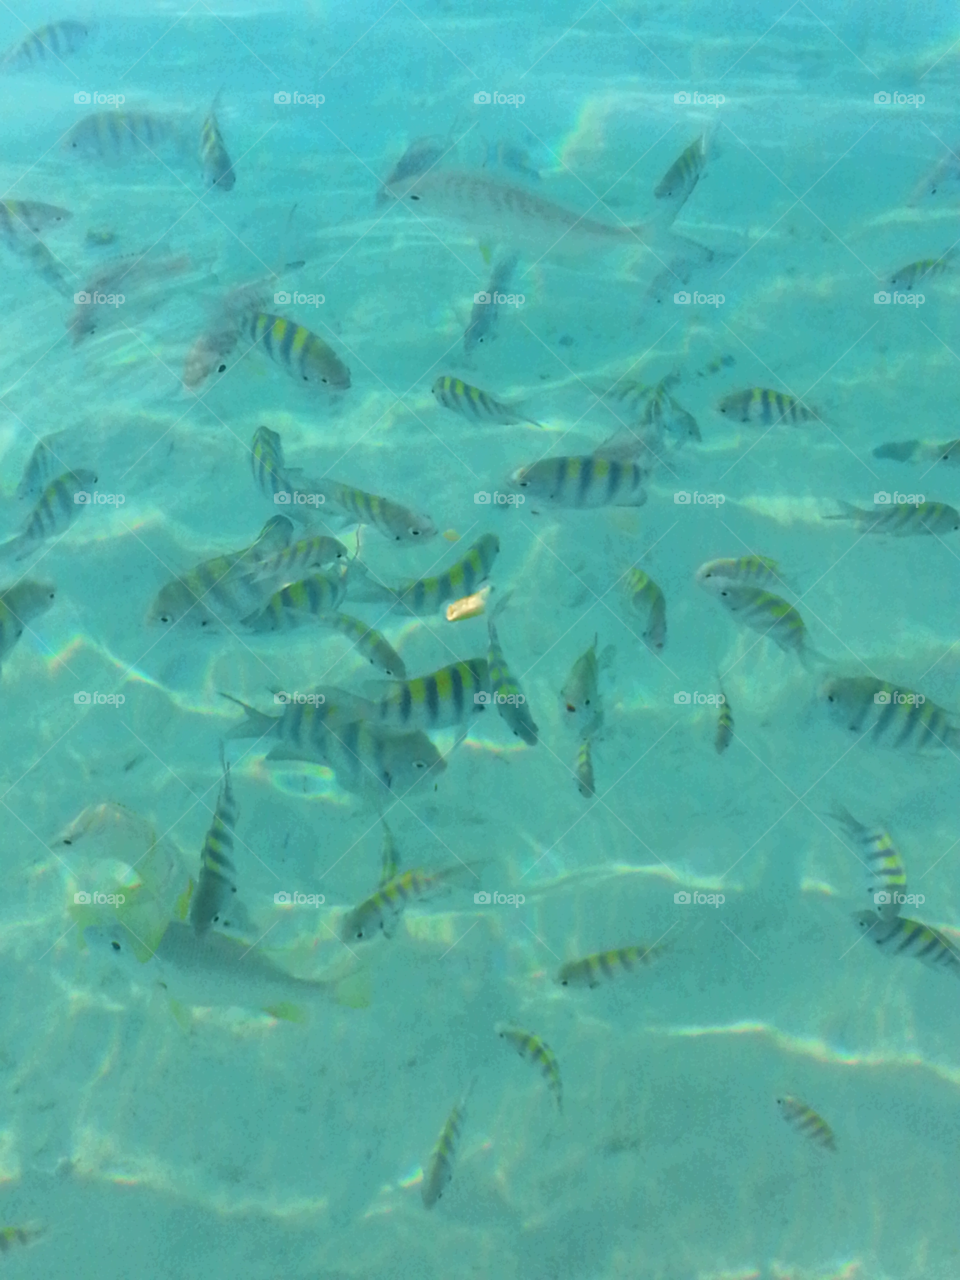 Fishys Everywhere!. Cute Fishys in Clear Blue Underwater Picture